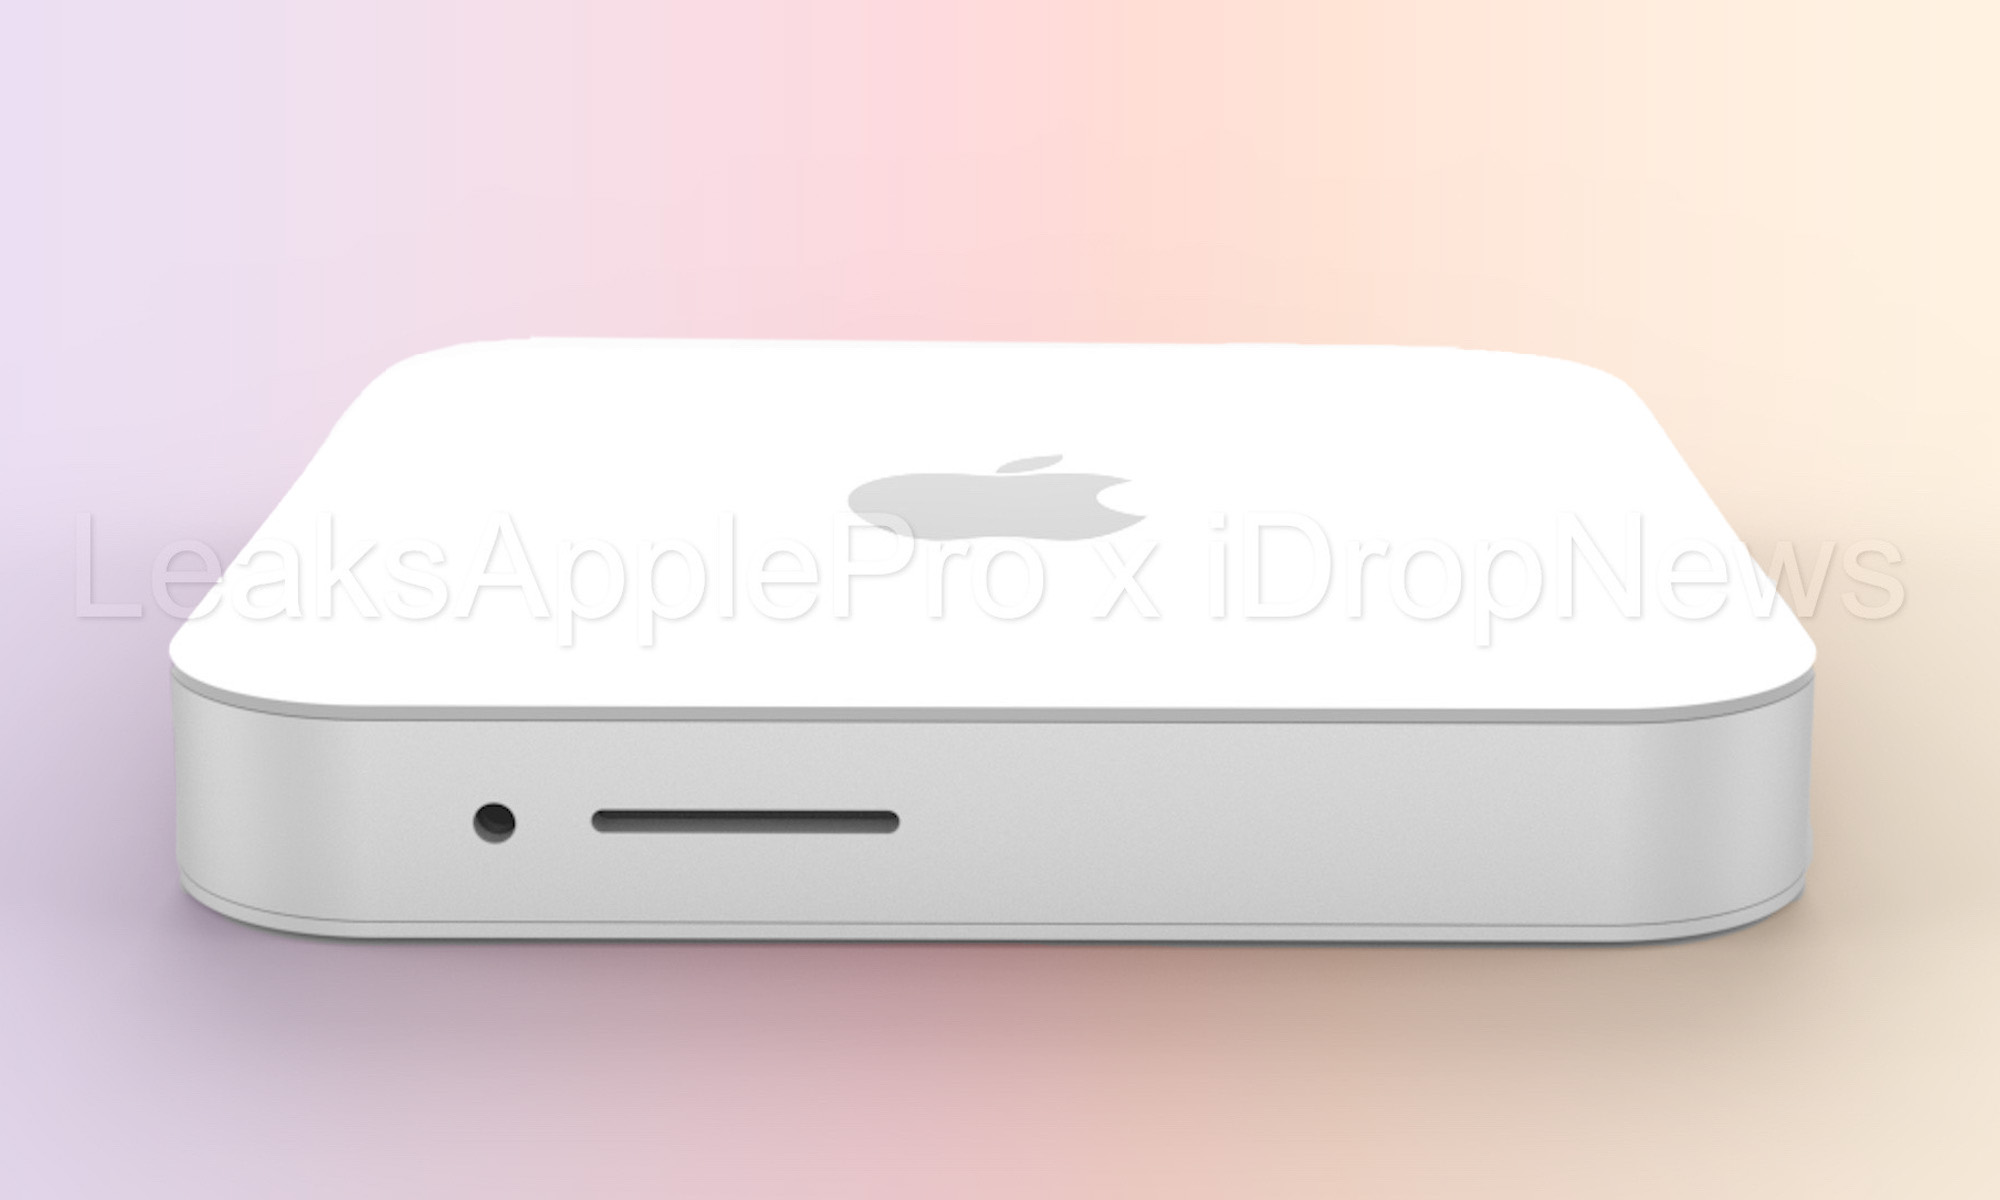 Apple Mac mini 2022 Concept Renders Hero